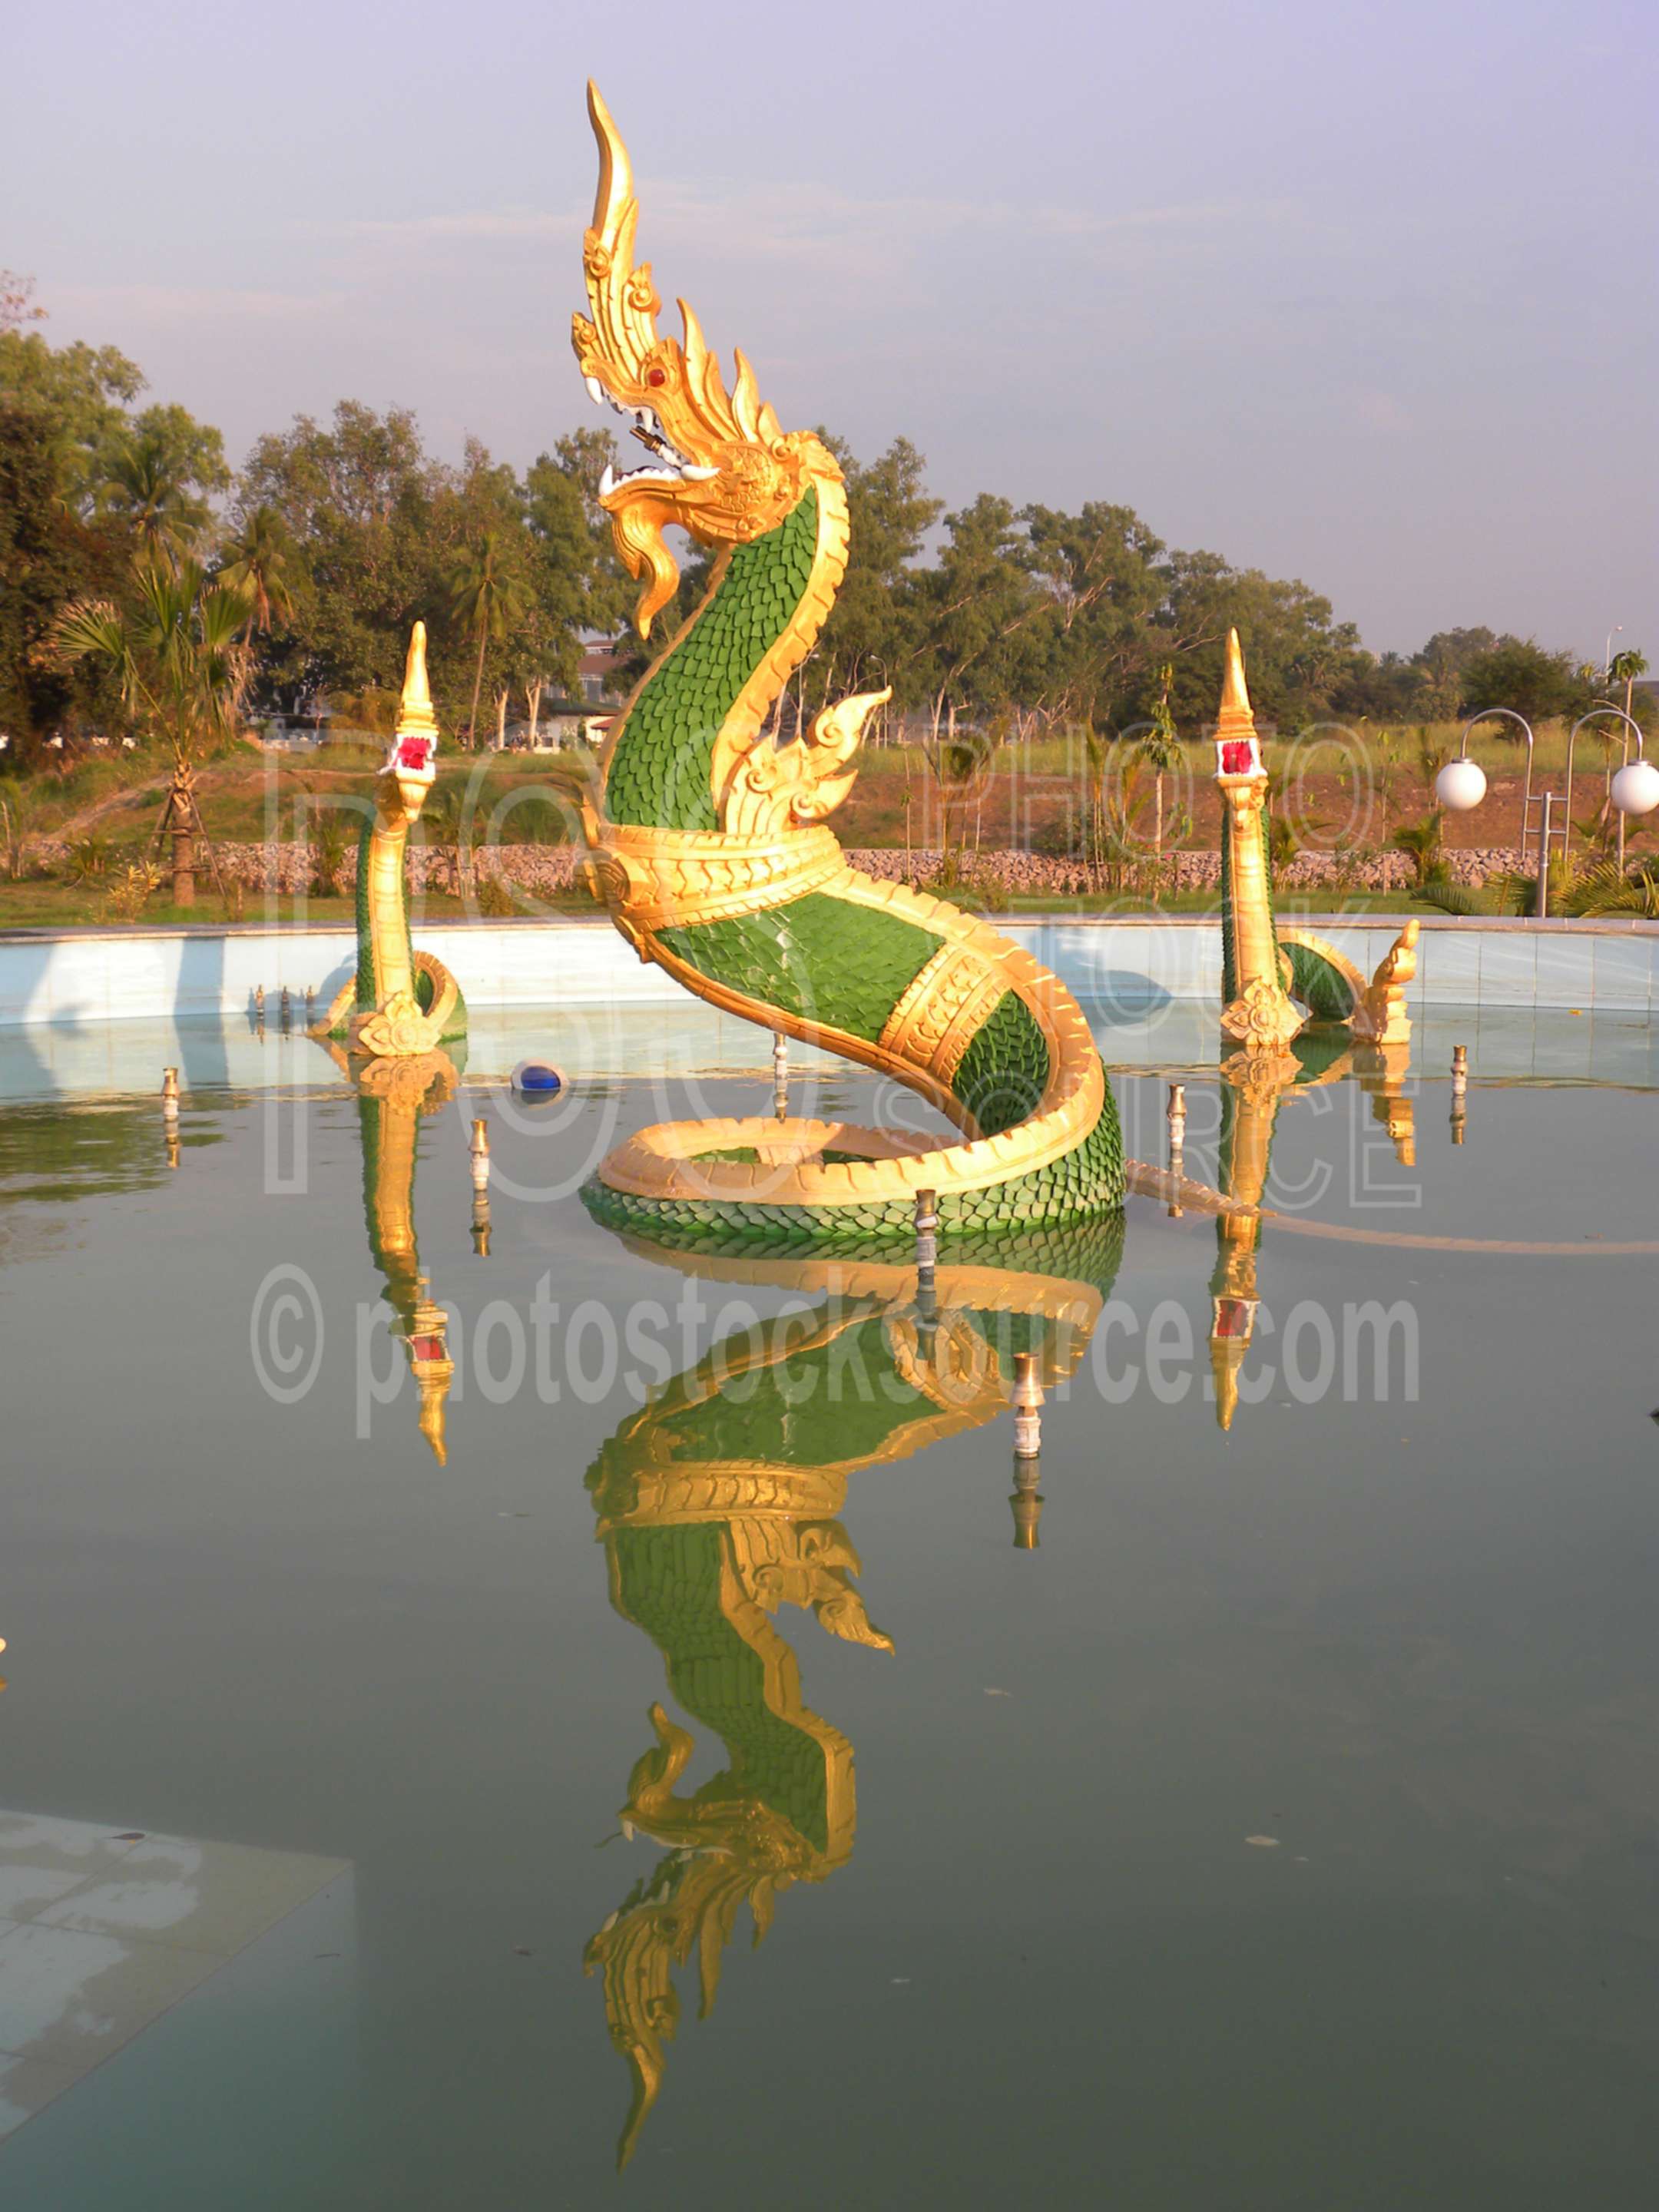 Naga Fountain,monument,statue,fountain,water,naga,serpents,afternoon,park